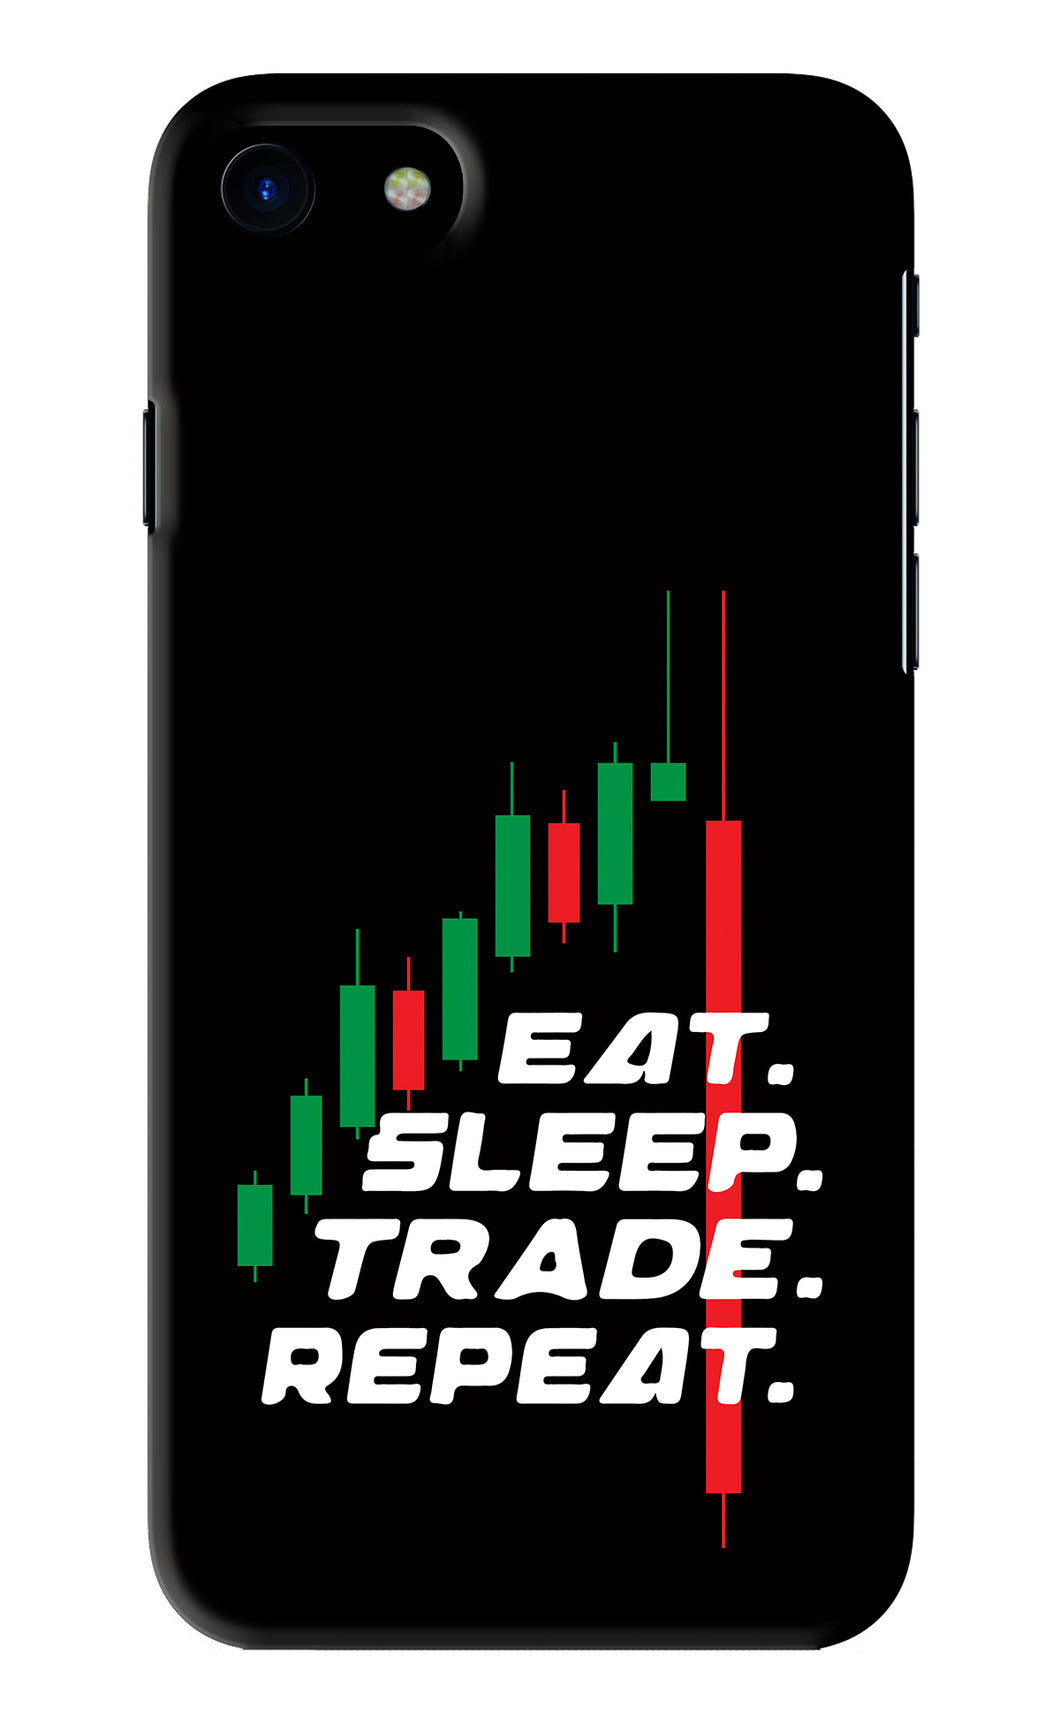 Eat Sleep Trade Repeat iPhone SE 2020 Back Skin Wrap